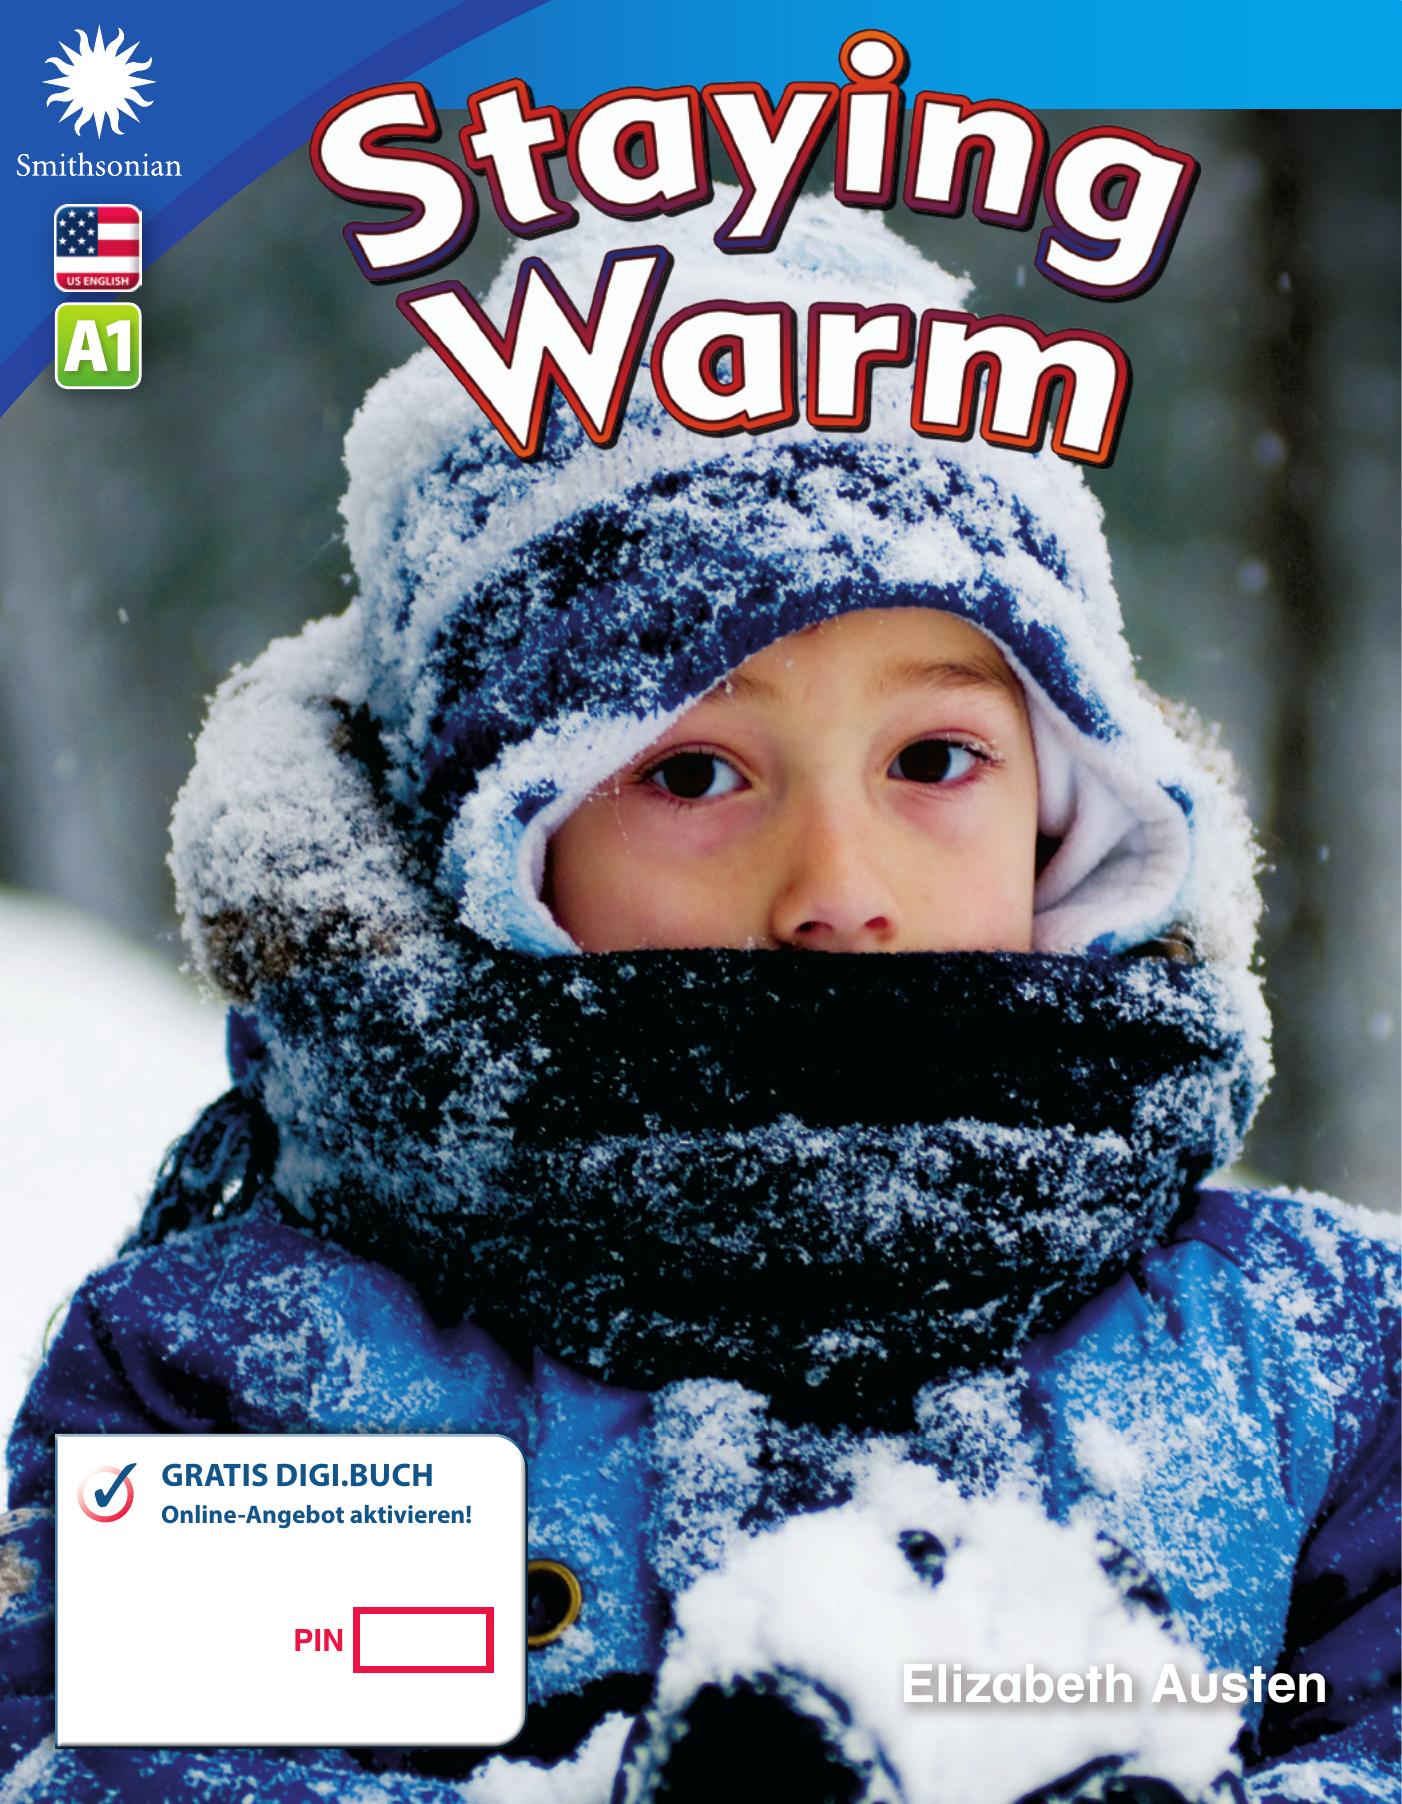 A1 – Staying Warm